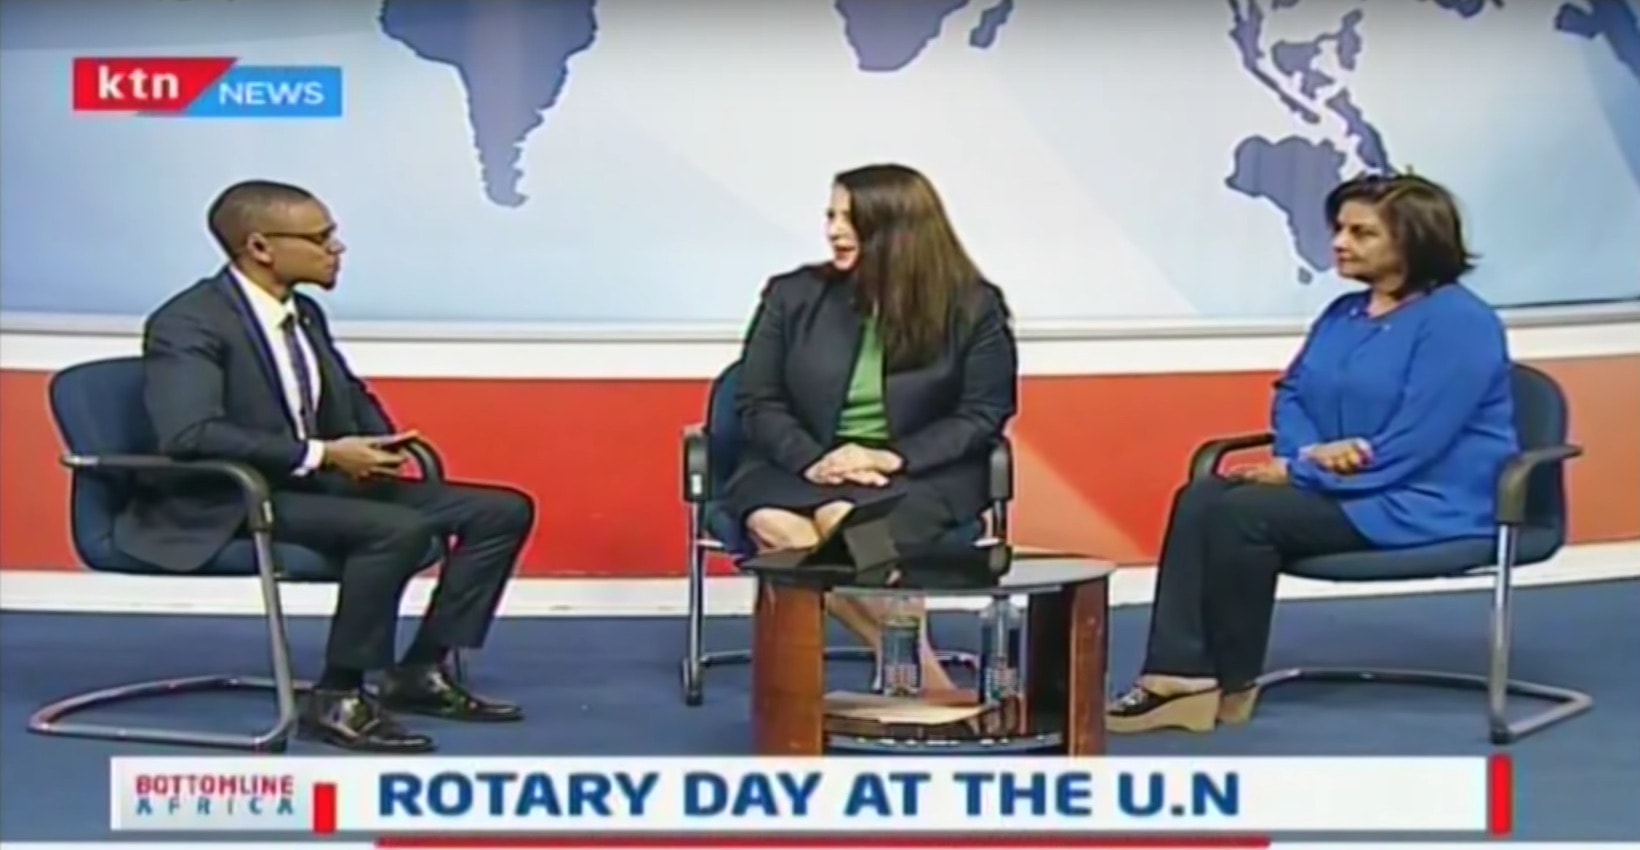 Rotary-UN-Day-Standard-Media-Kenya-News-Michele-Berg-Deputy-General-Secretary-Rotary-International-Ludovic-Grosjean